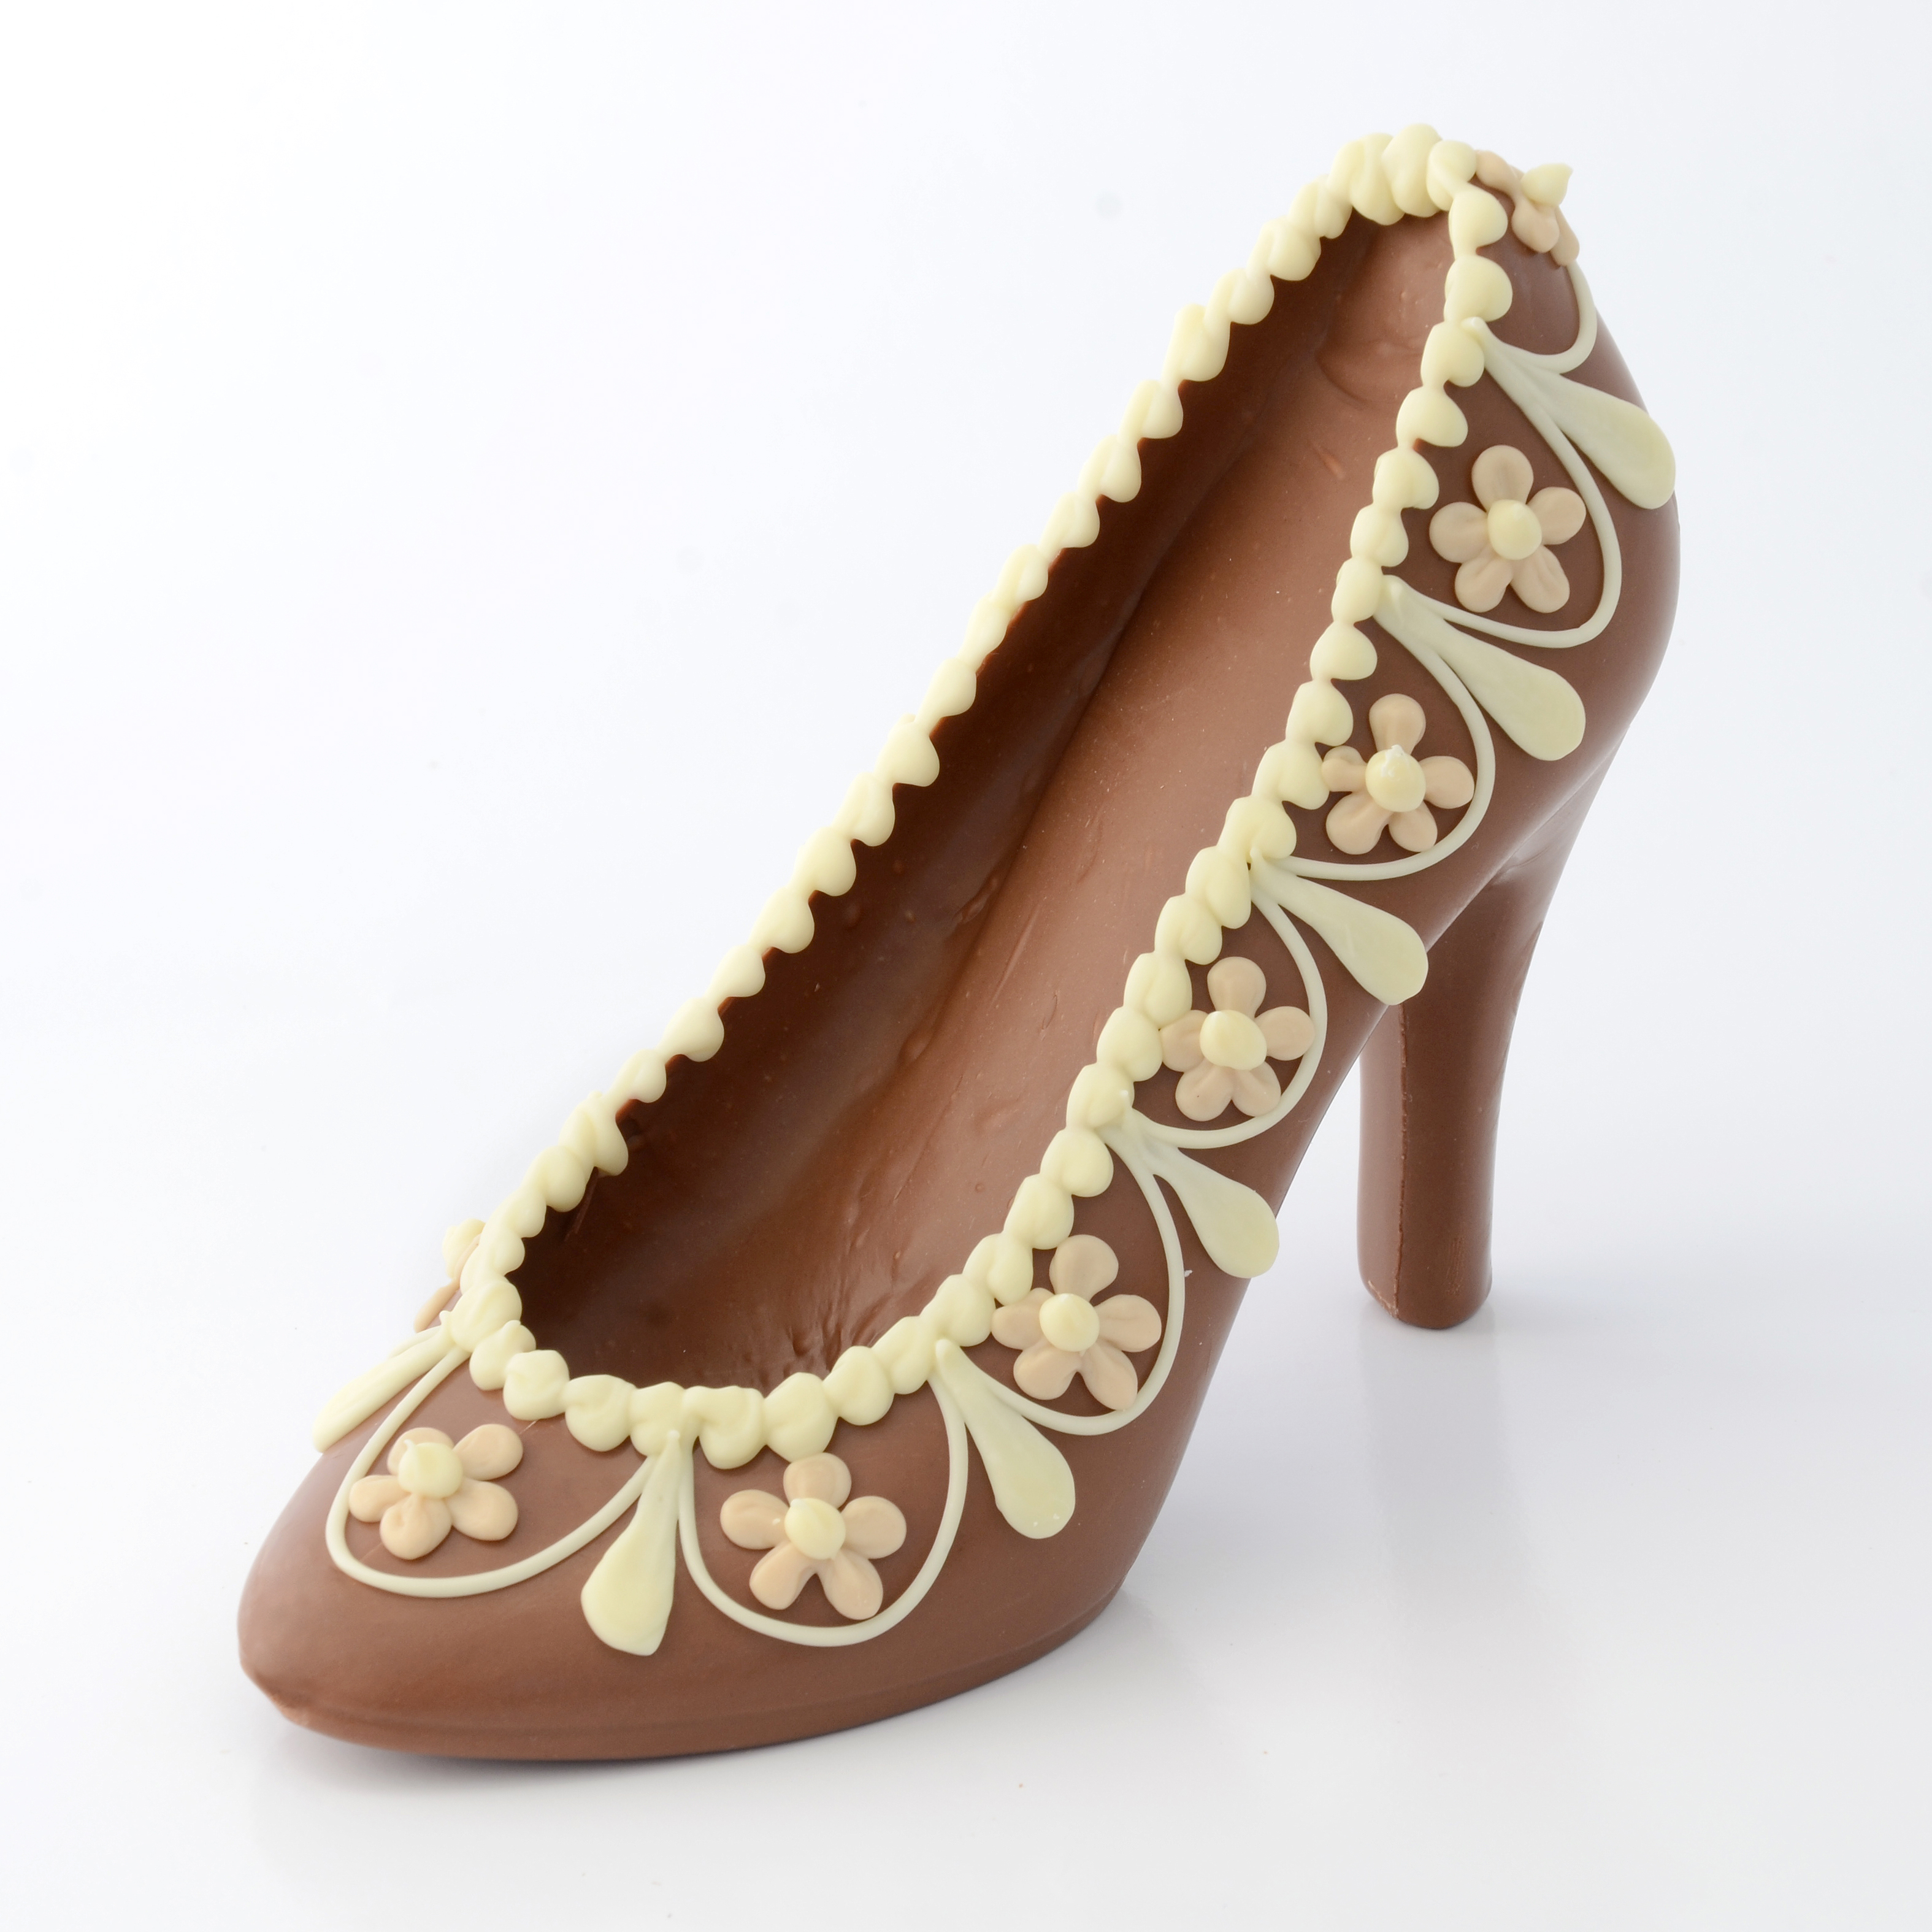 Solid Chocolate Stiletto Shoe - Choccy Heaven